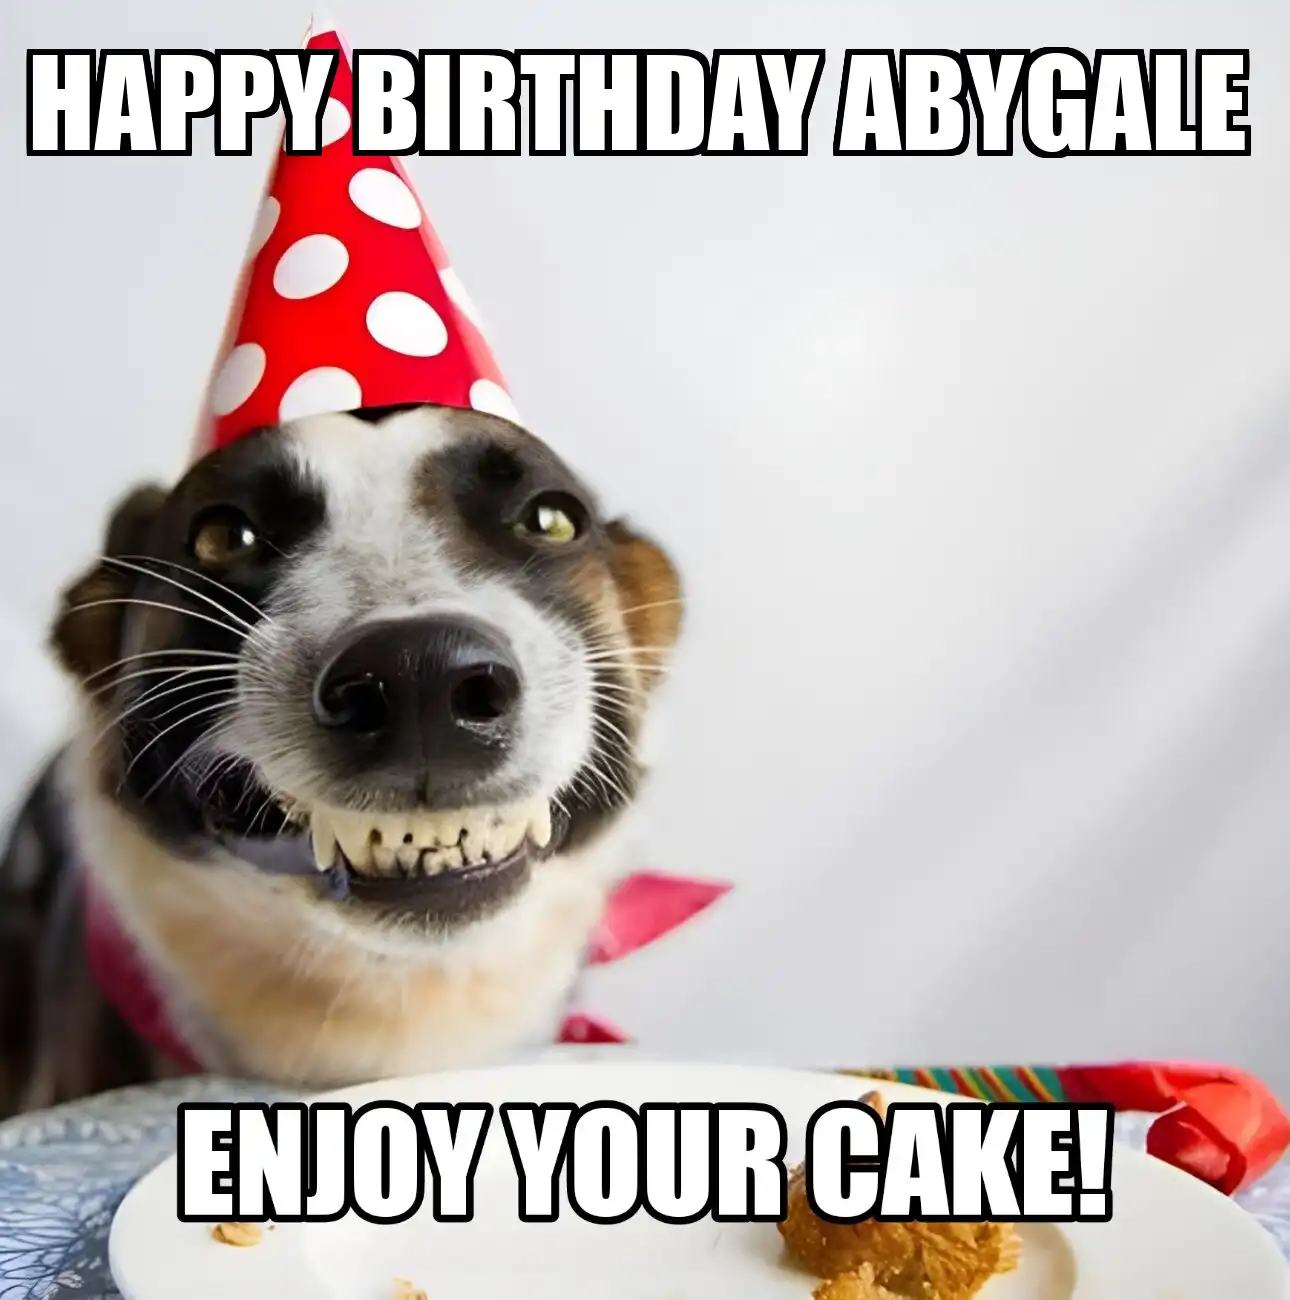 Happy Birthday Abygale Enjoy Your Cake Dog Meme